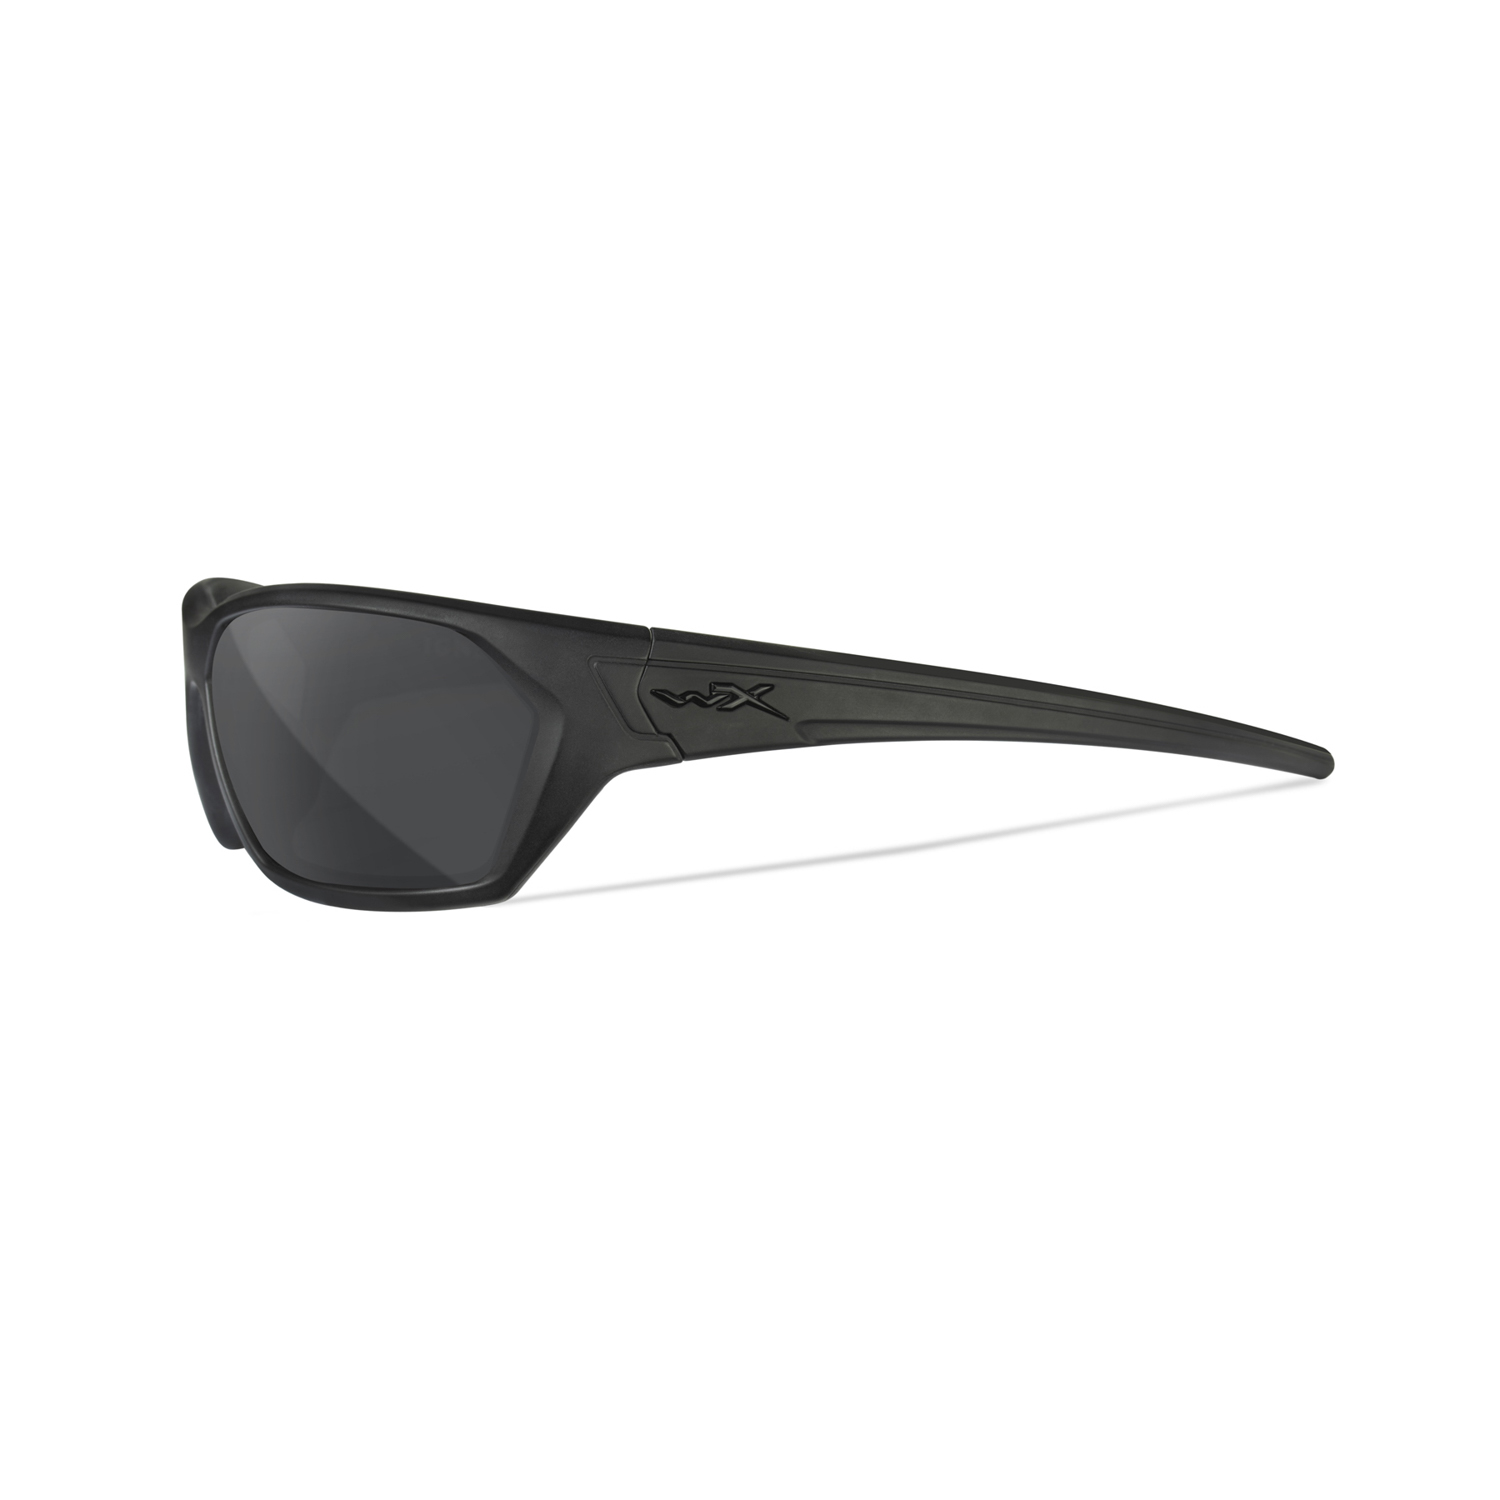 Wiley X WX Ignite Sunglasses